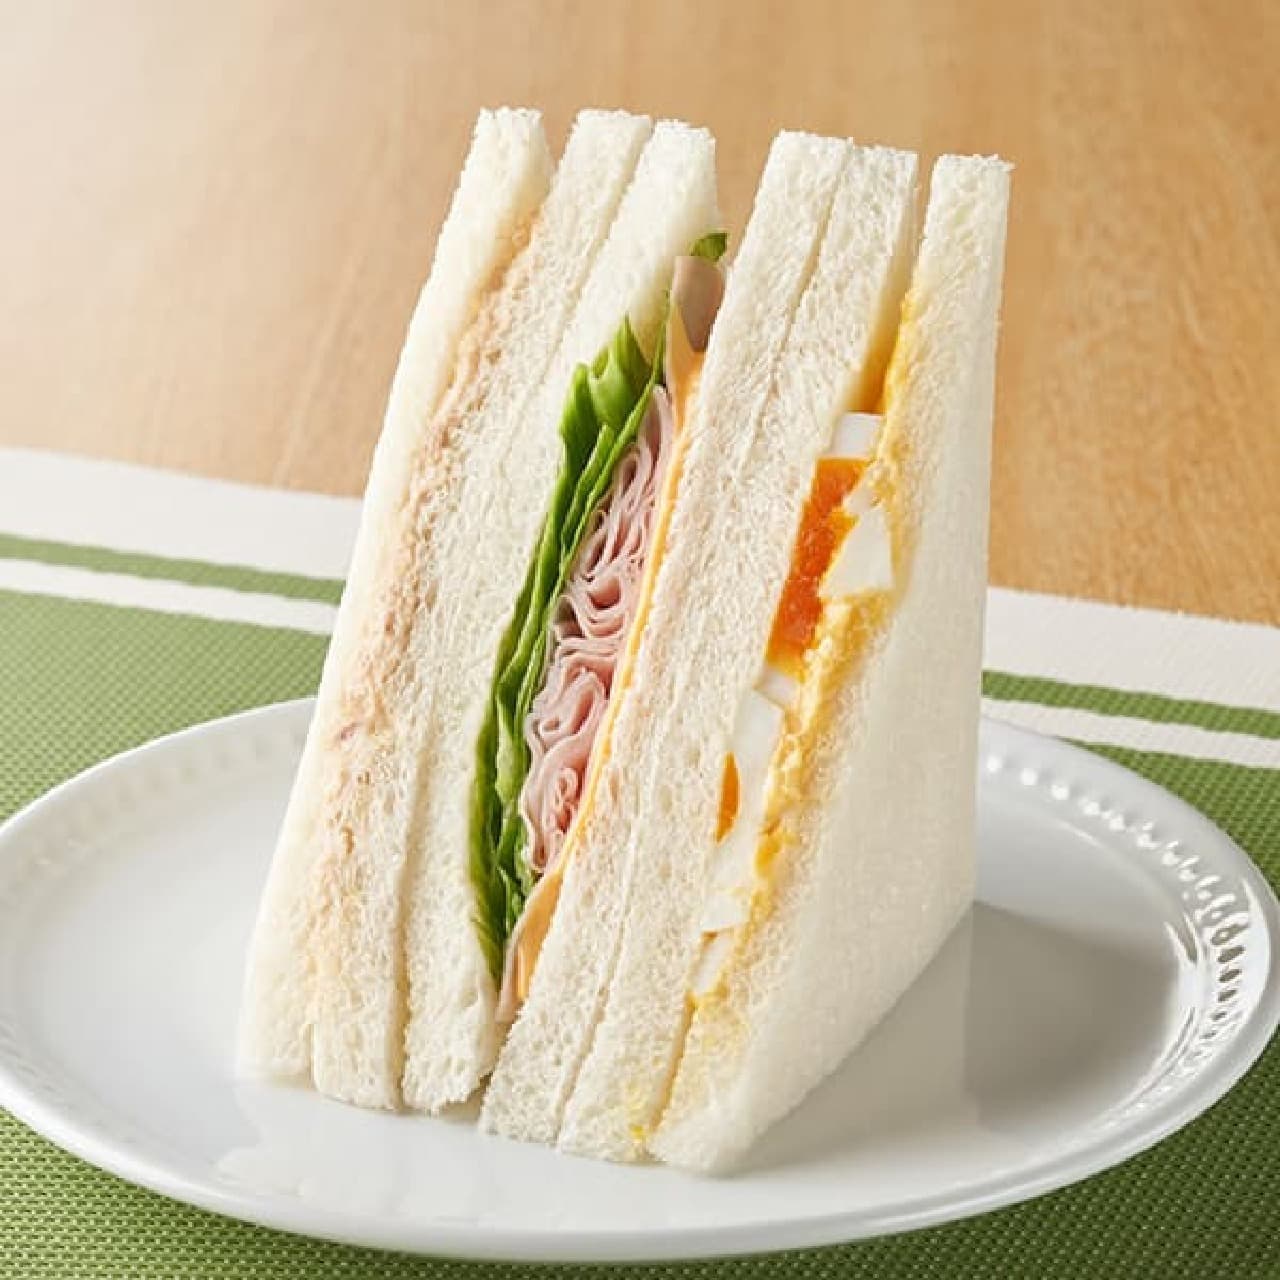 FamilyMart "Mixed Sandwich